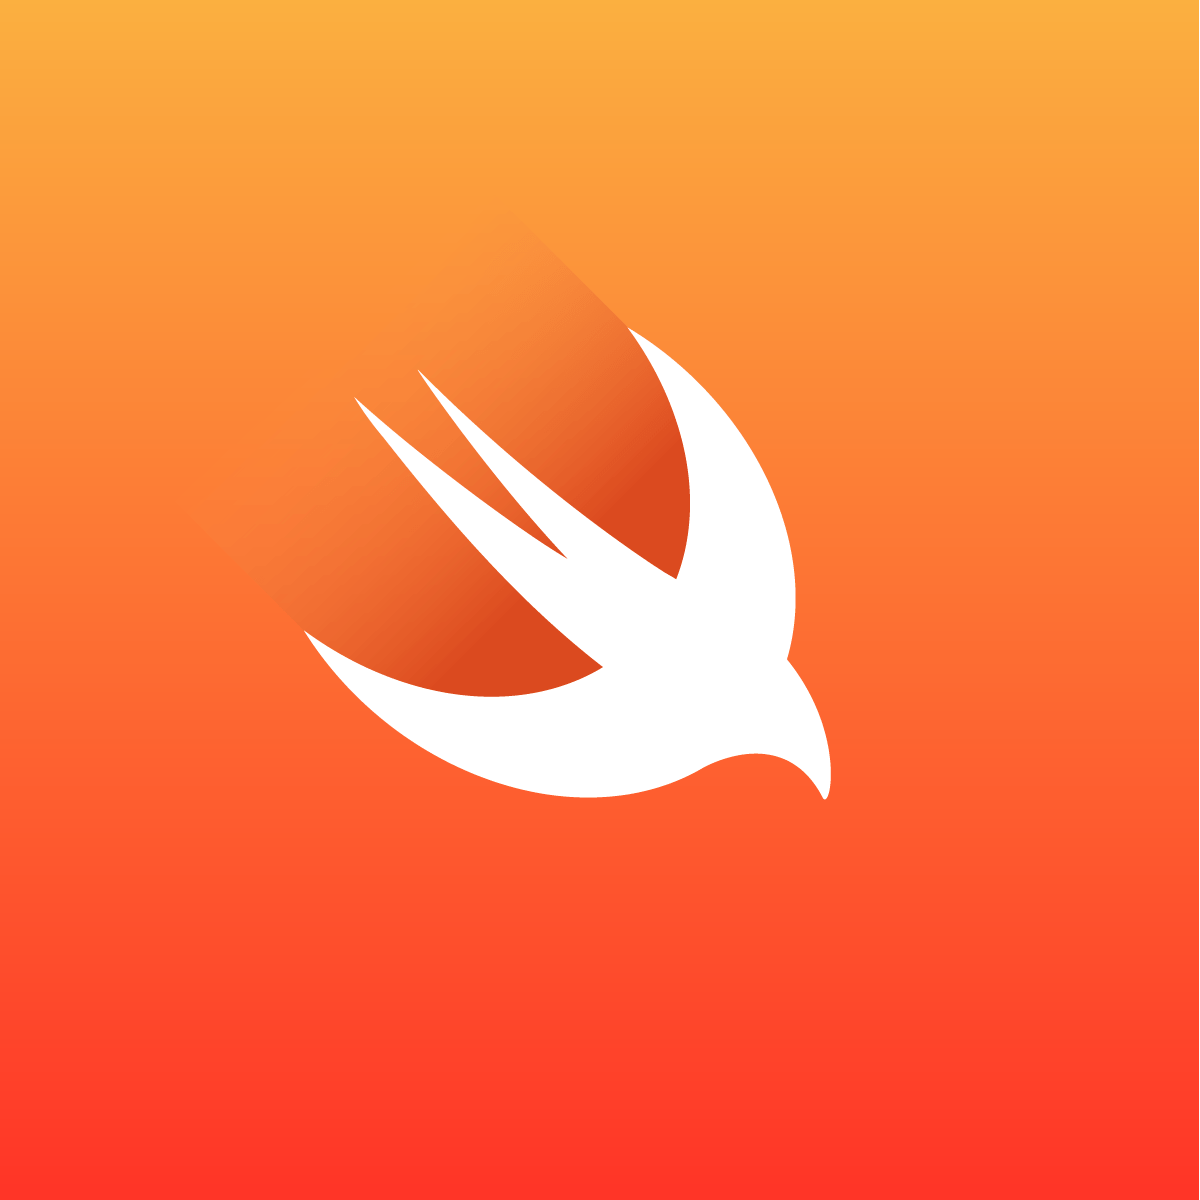 Red F Software Program Logo - Swift